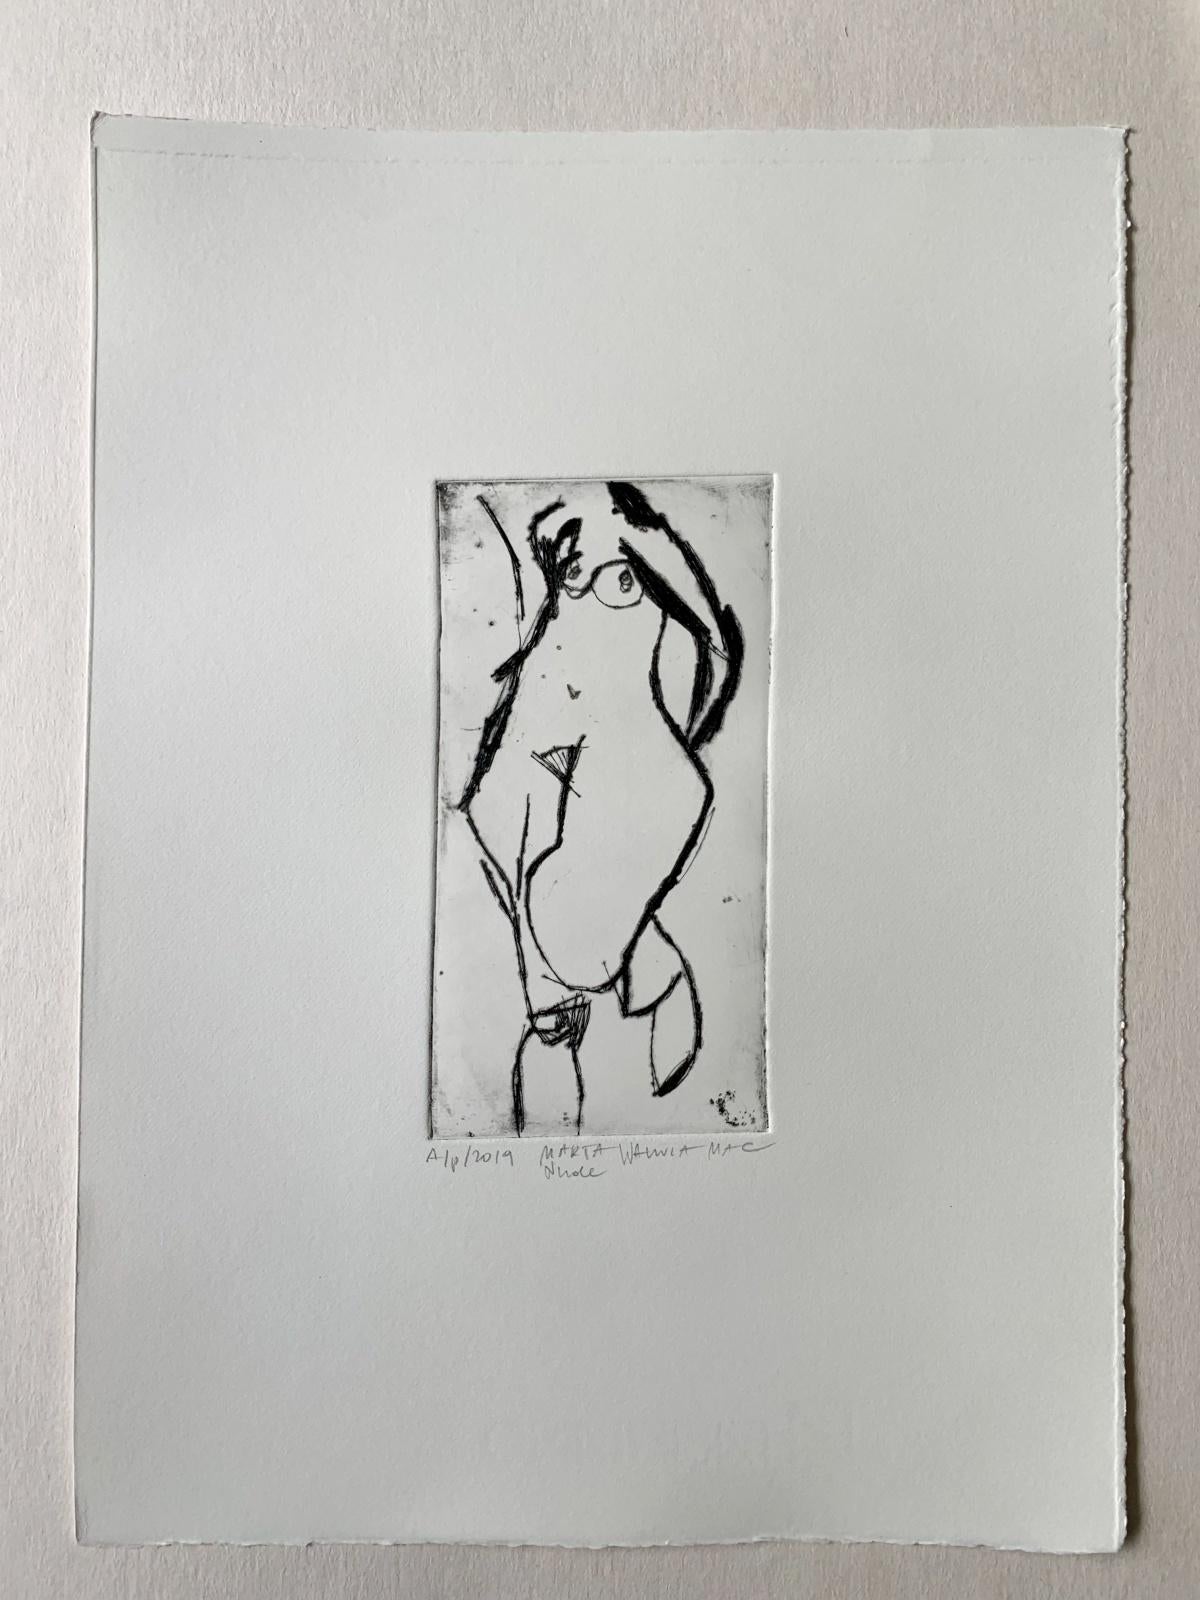 Nude - Contemporary Figurative Etching Print, Female artist, Polish art - Gray Figurative Print by Marta Wakula-Mac